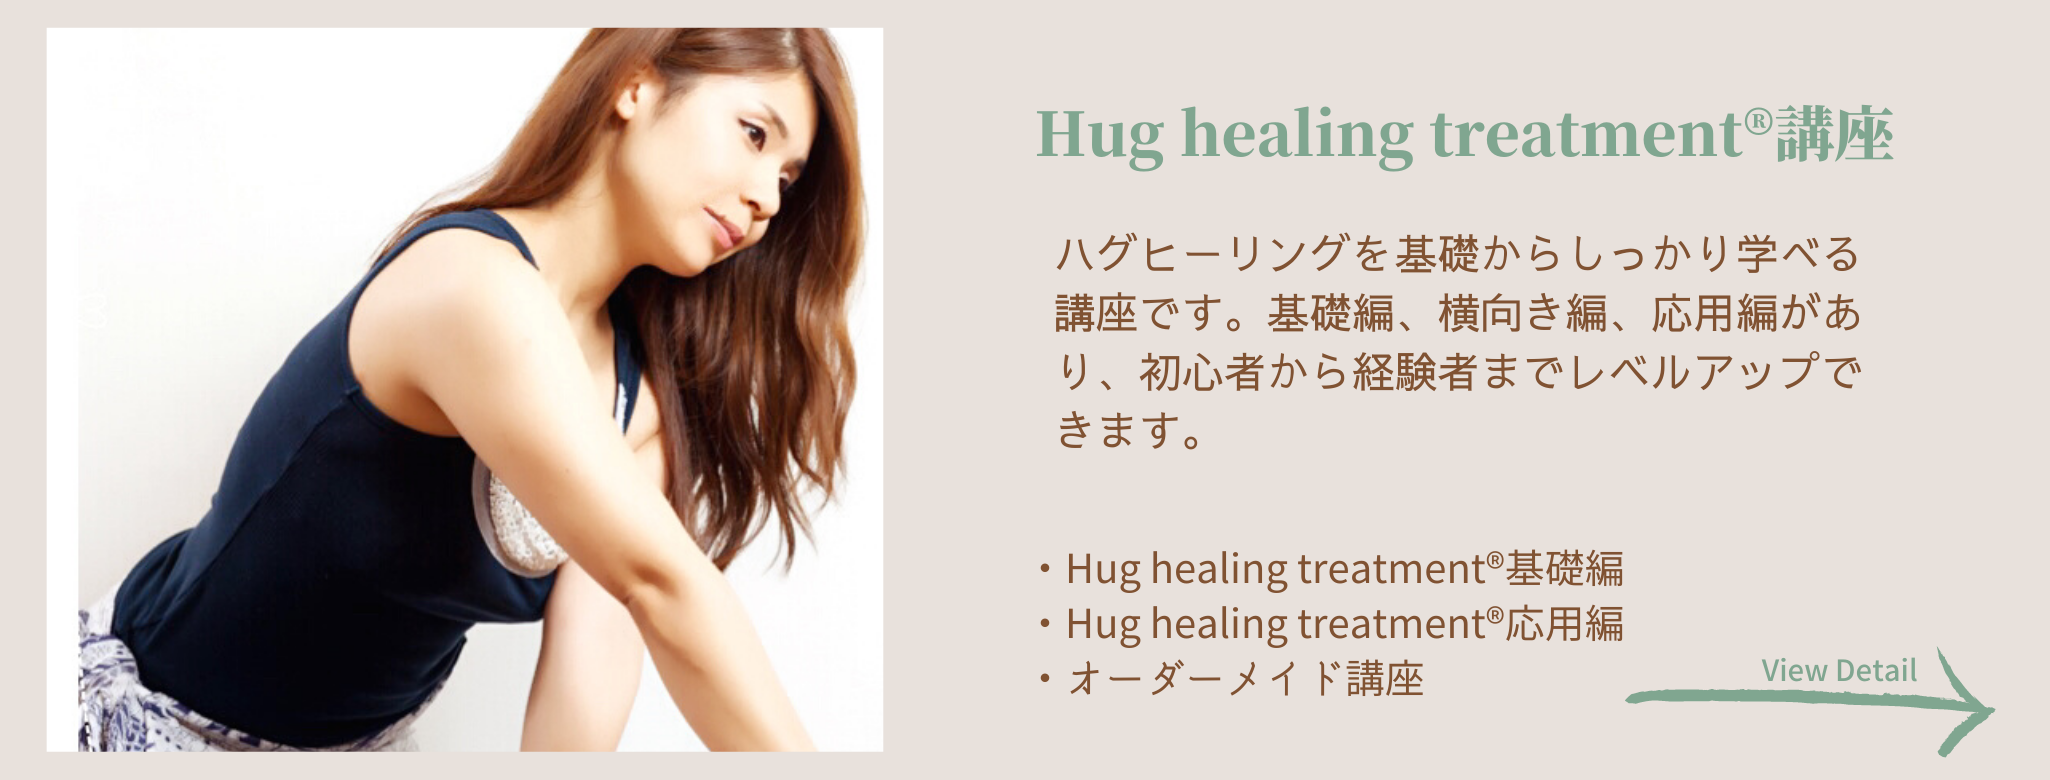 Hug healing treatment® vol.1基礎編 改訂版 - Hug healing school